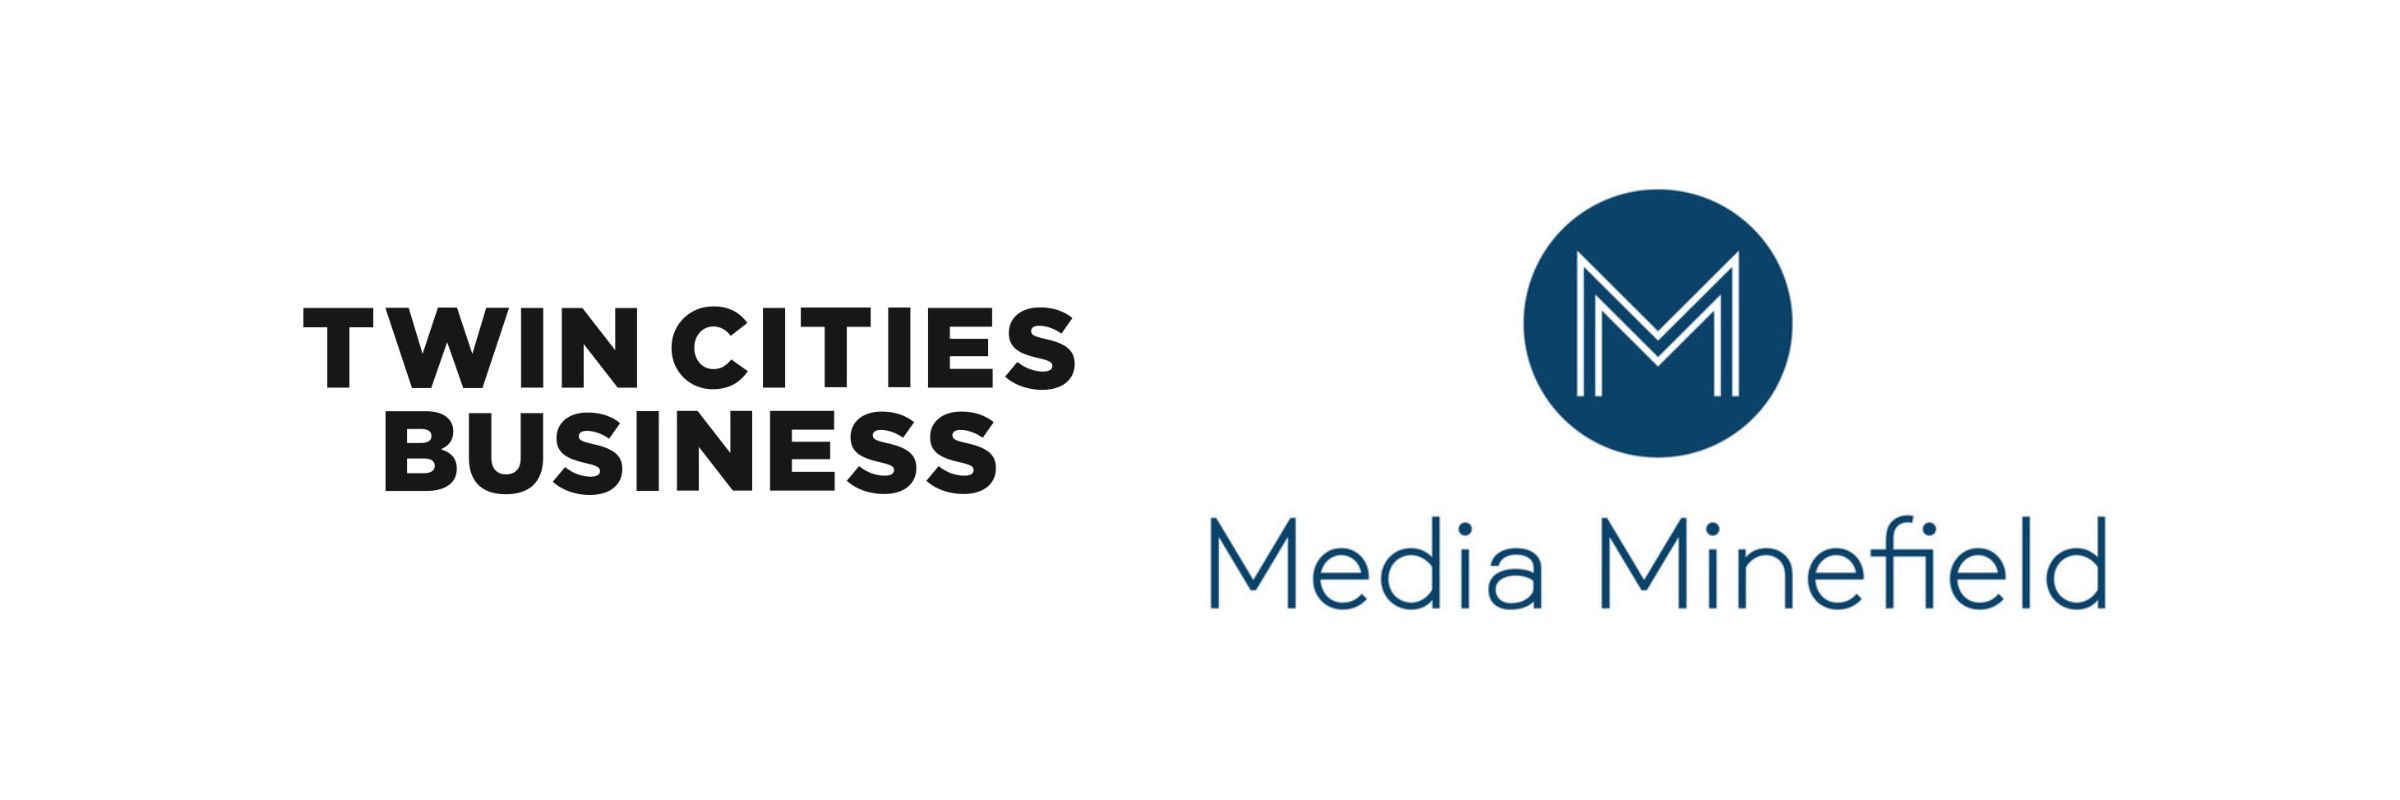 Twin Cities Business, Media Minefield